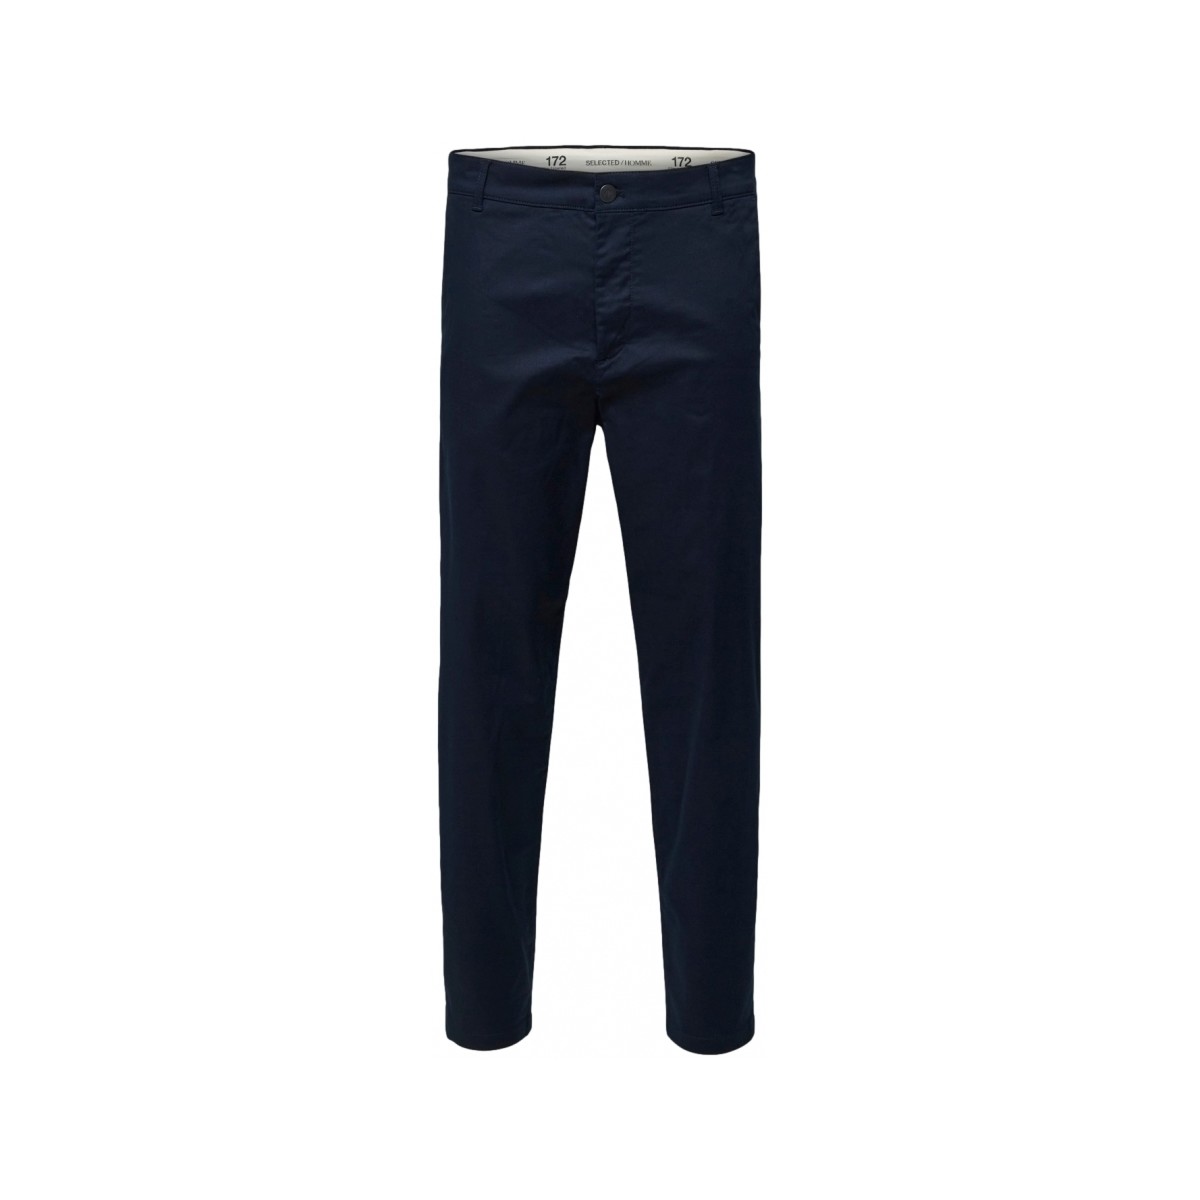 Vêtements Homme Pantalons Selected Slim Tape Repton 172 Flex Pants - Dark Sapphire Bleu